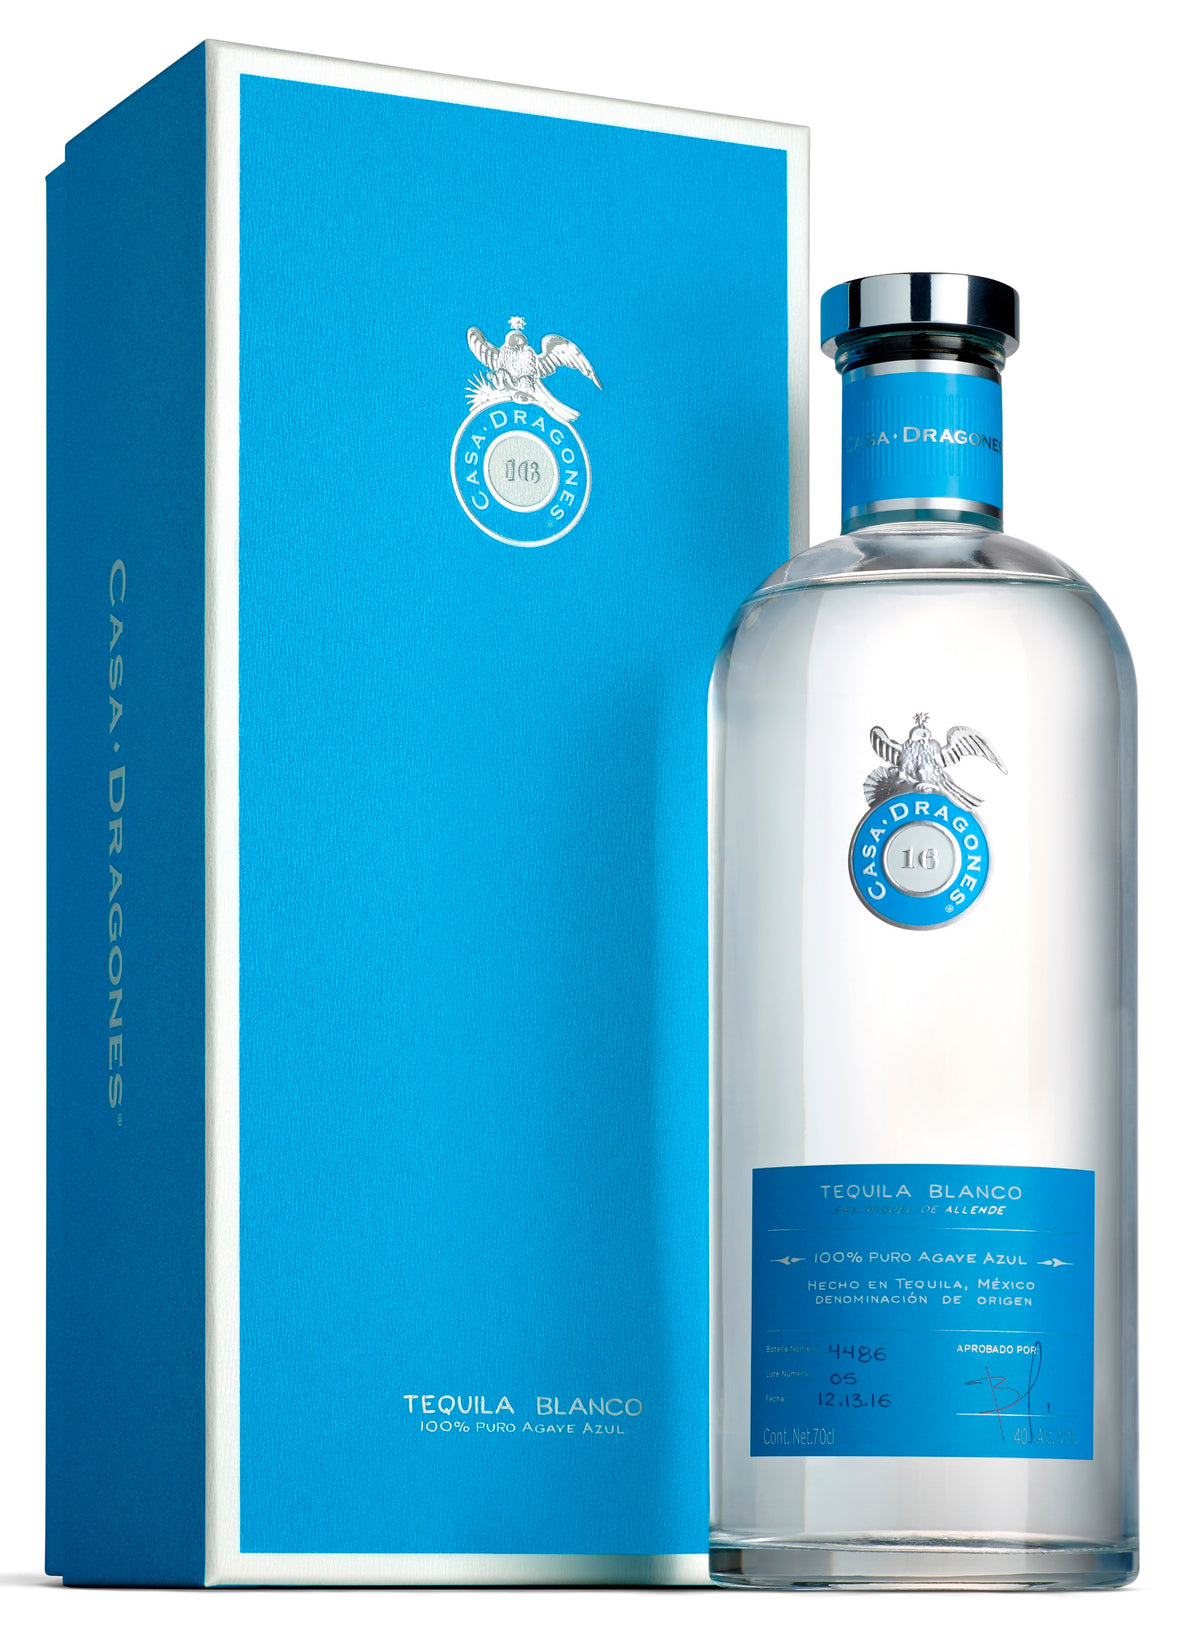 Bottle of Casa Dragones Tequila Blanco, 40% - The Spirits Room